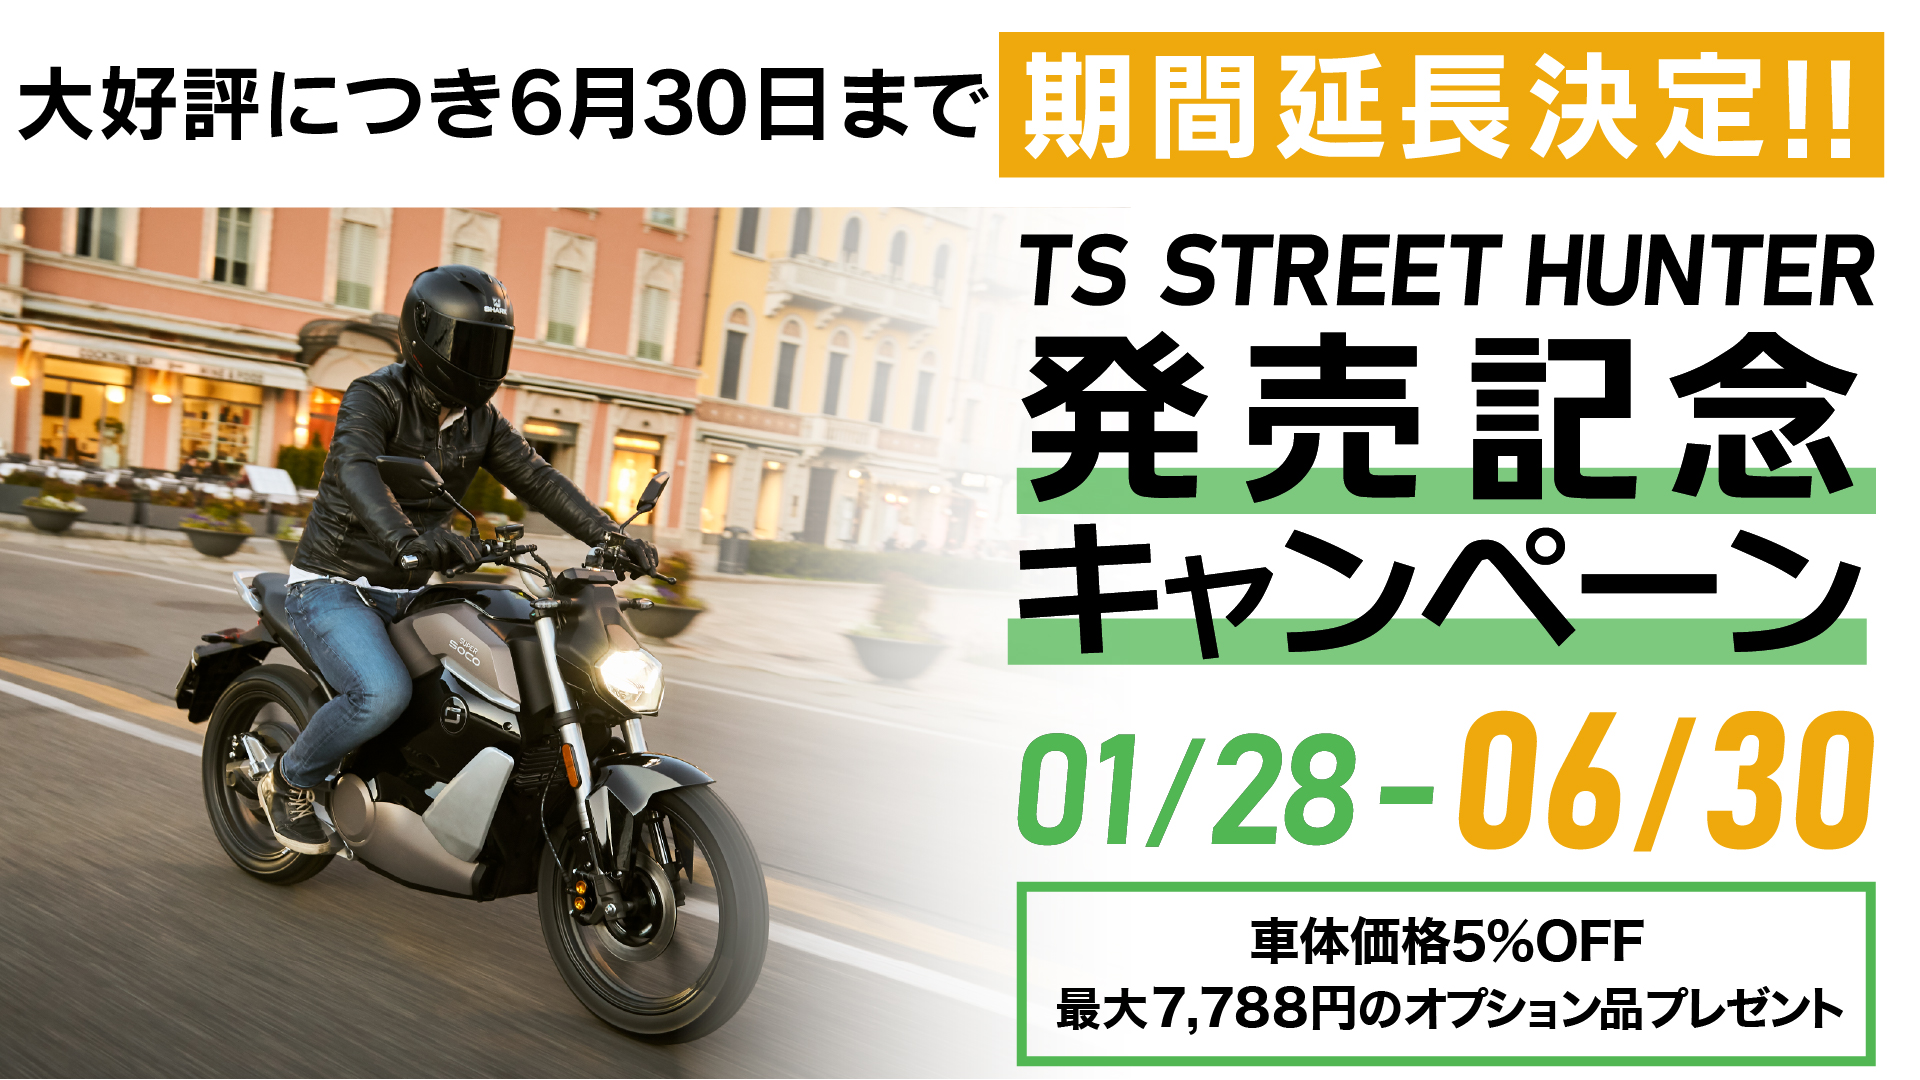 TS STREET HUNTER発売記念キャンペーン